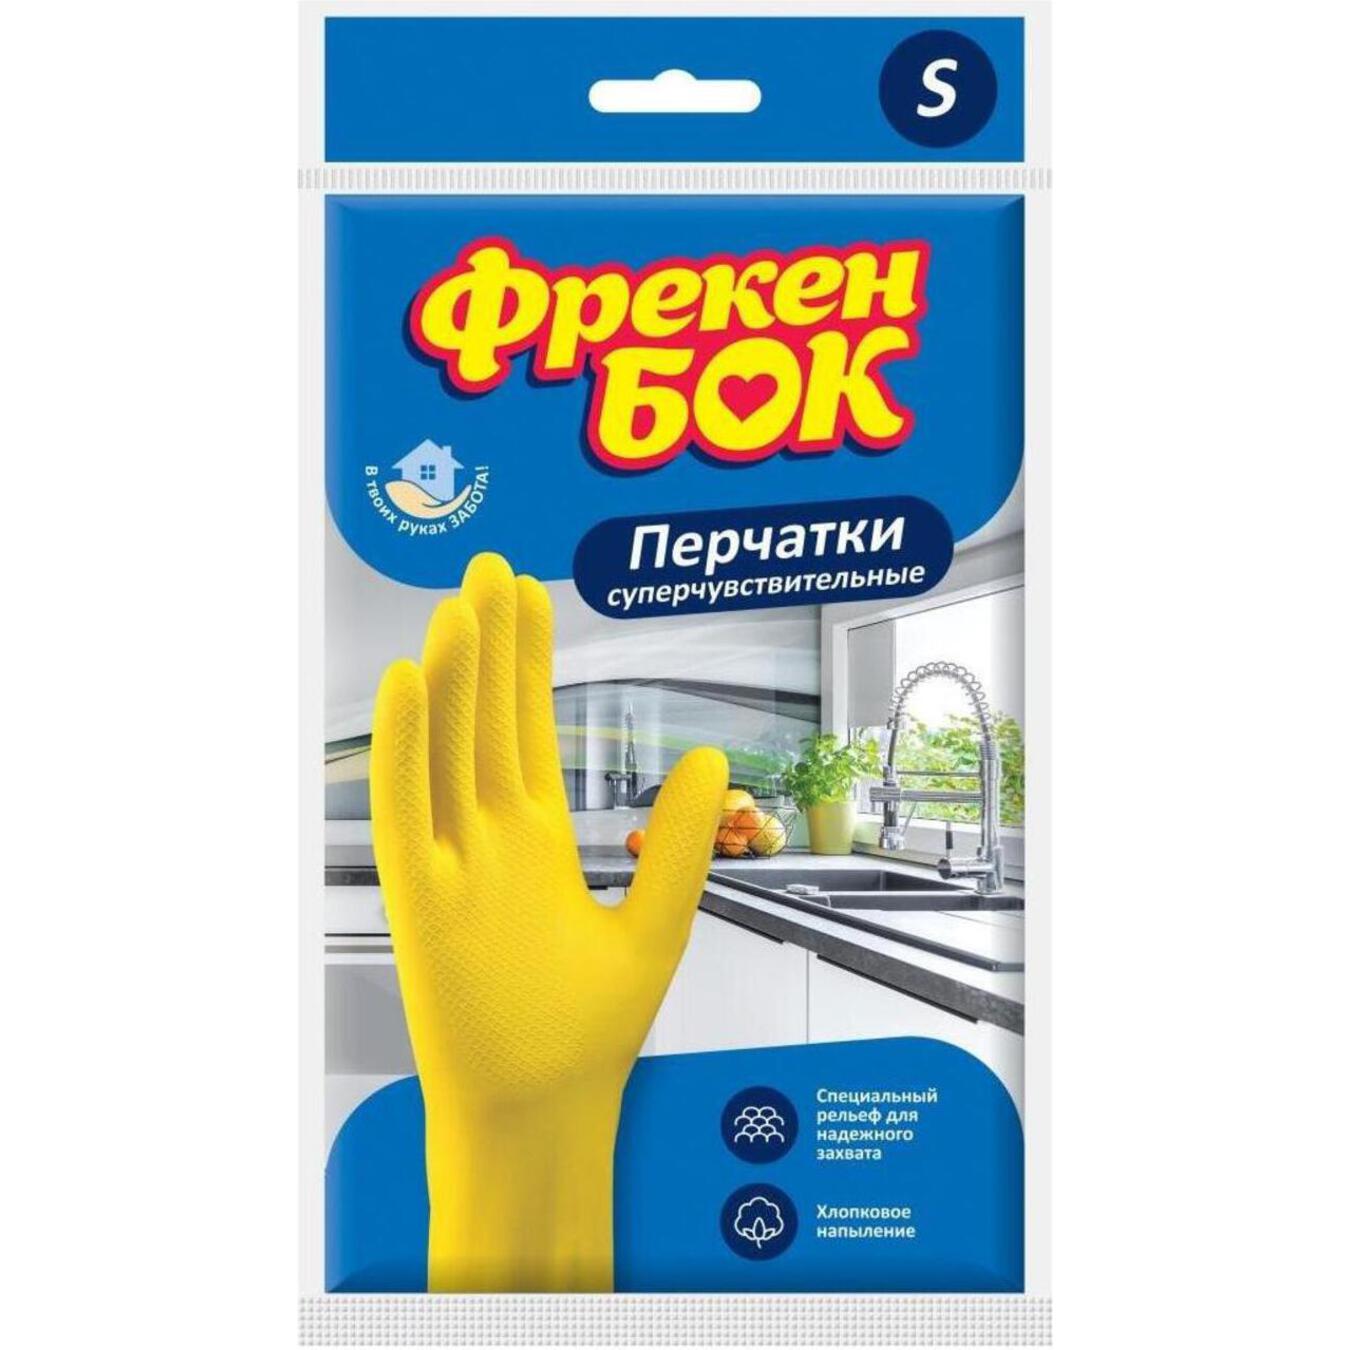 Freken Bok Rubber Dishwashing Gloves Size S